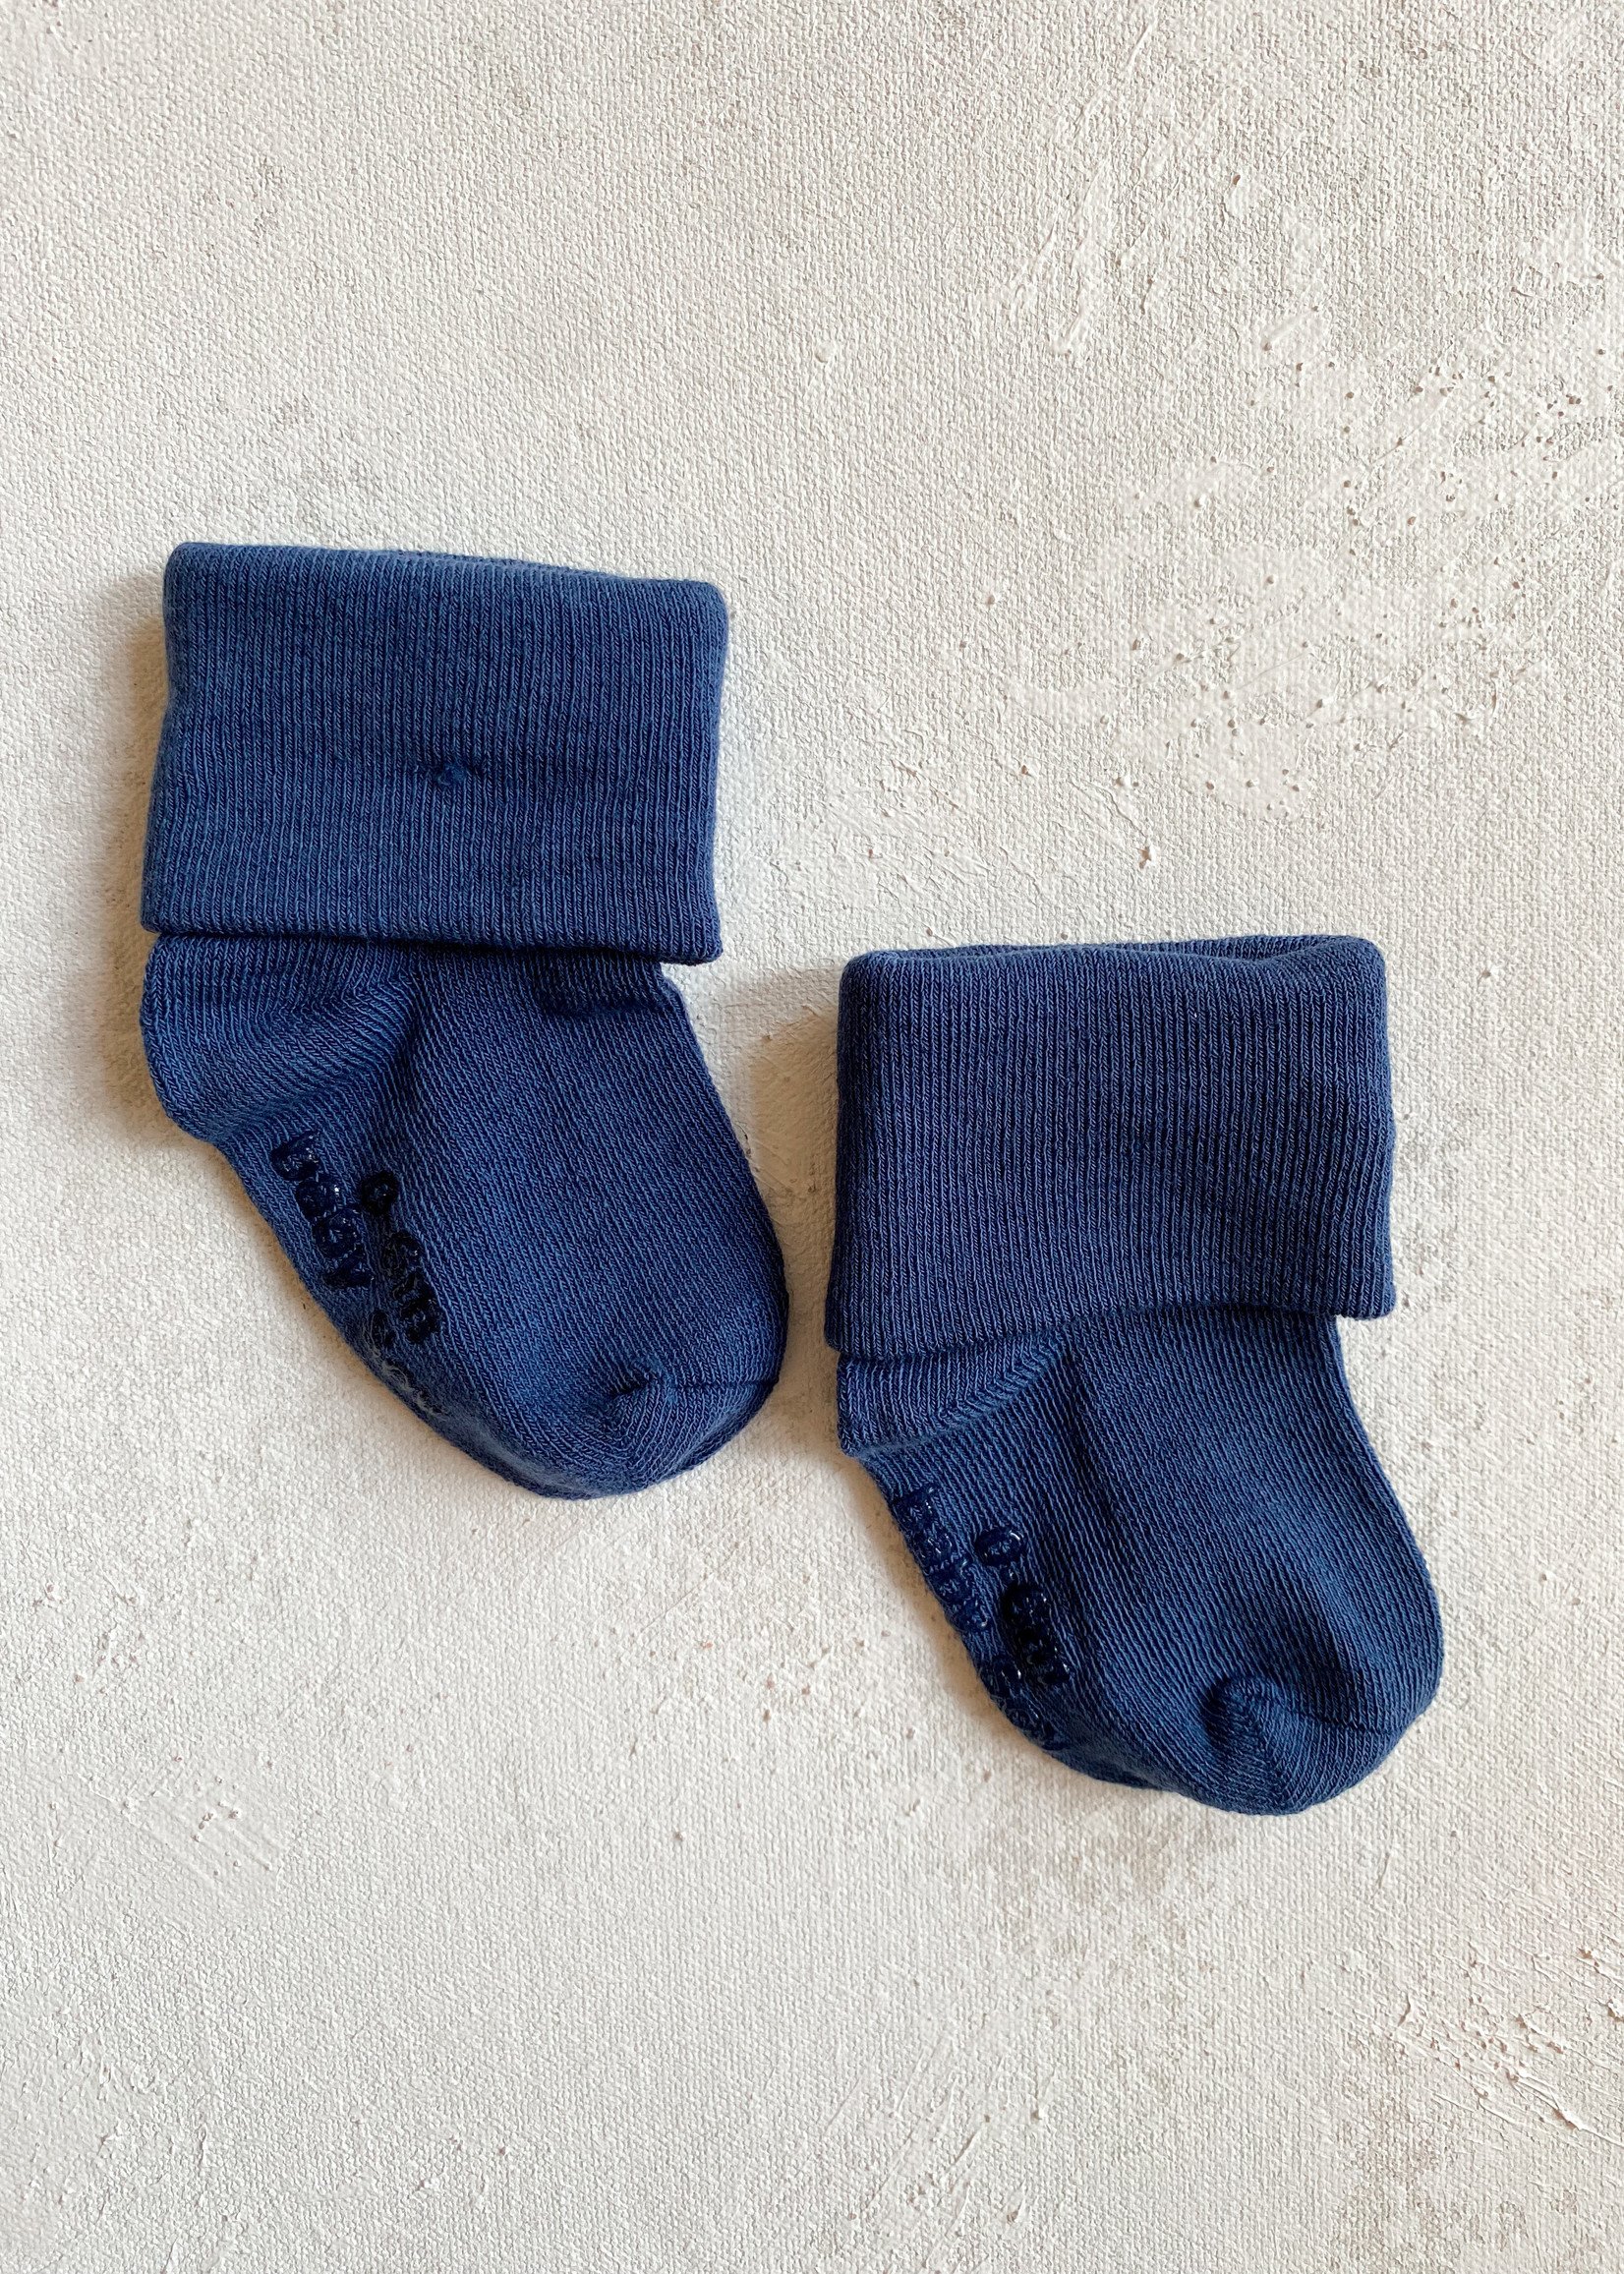 Elitaire Petite Modern Socks in Indigo